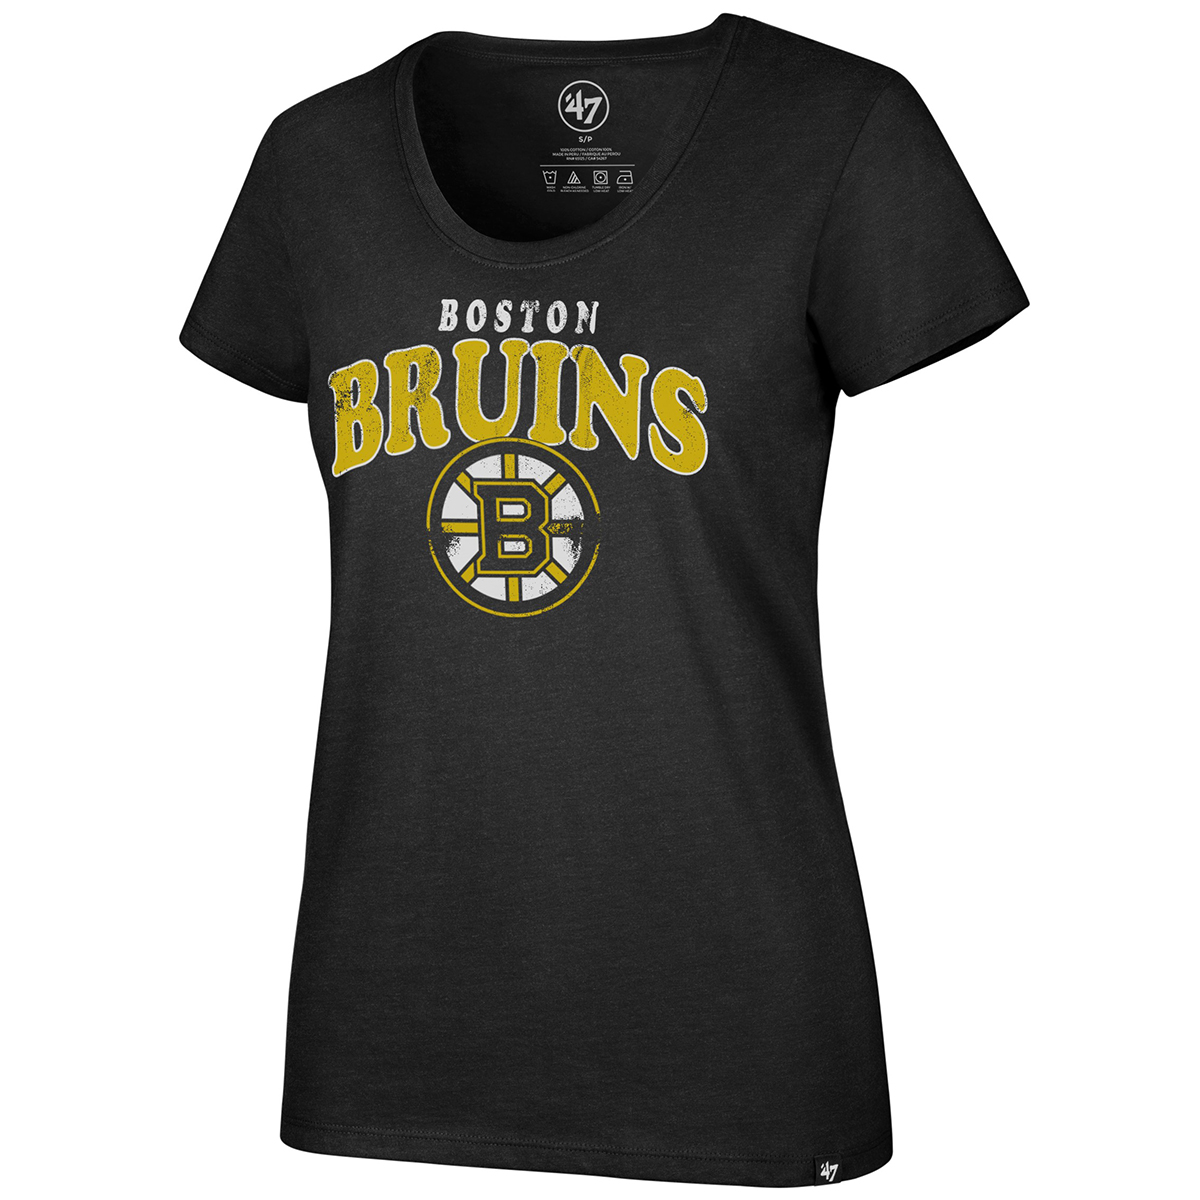 Boston Bruins Women's '47 Brand Club Short-Sleeve Tee - Black, M